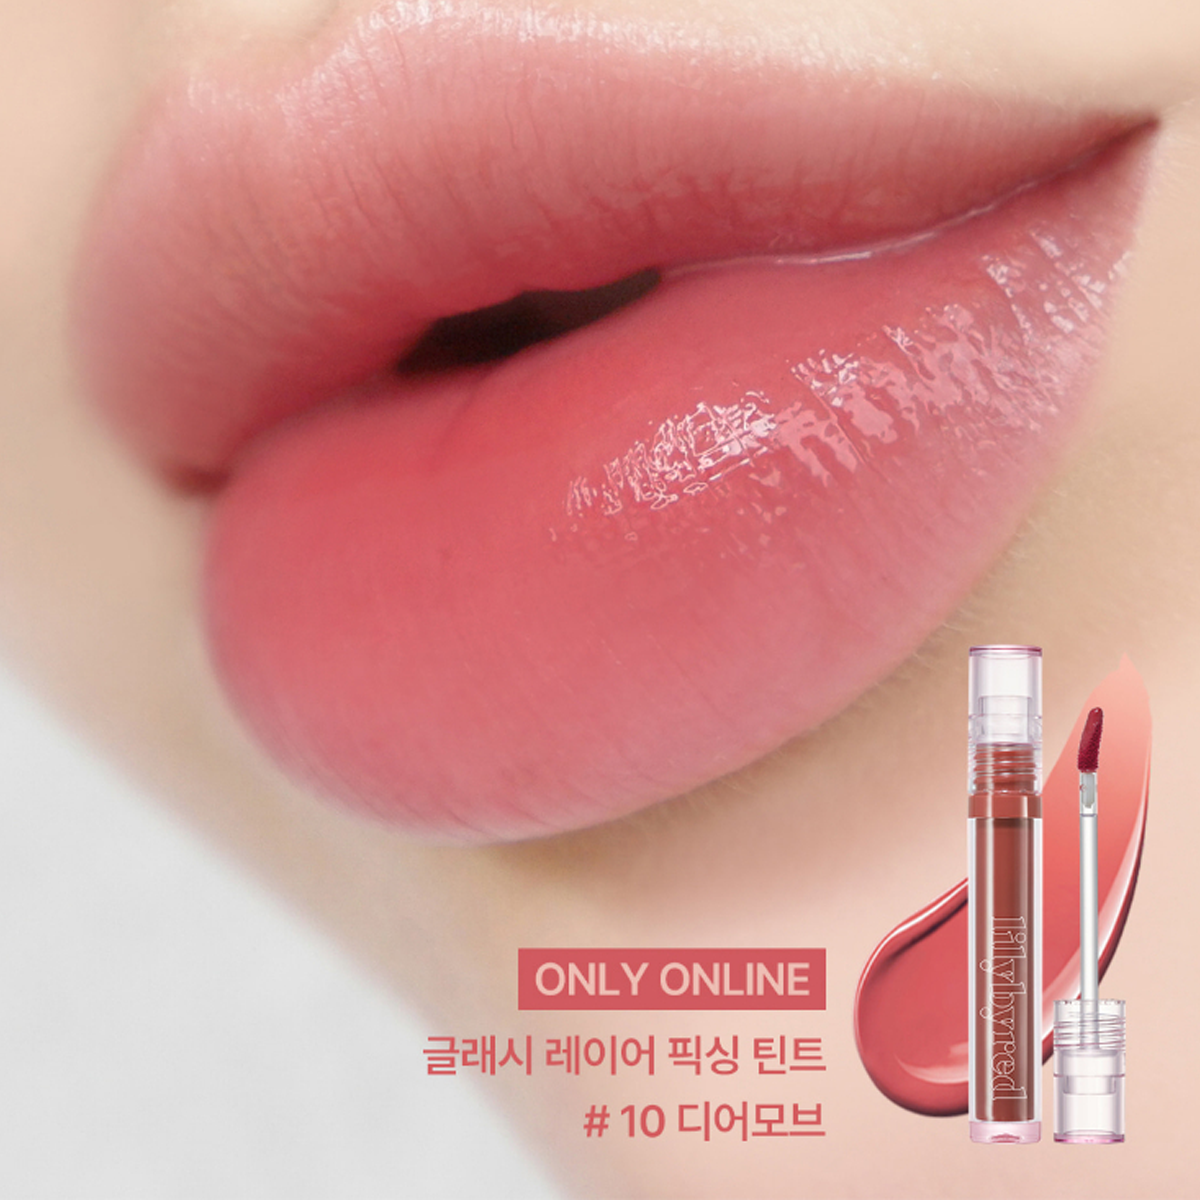 lilybyred - Glassy Layer Fixing Tint - Korean Cosmetic - glass-like finish on lips - Lipstick - Korean Lips tint Gloss - Hyaluronic Lipgloss Makeup